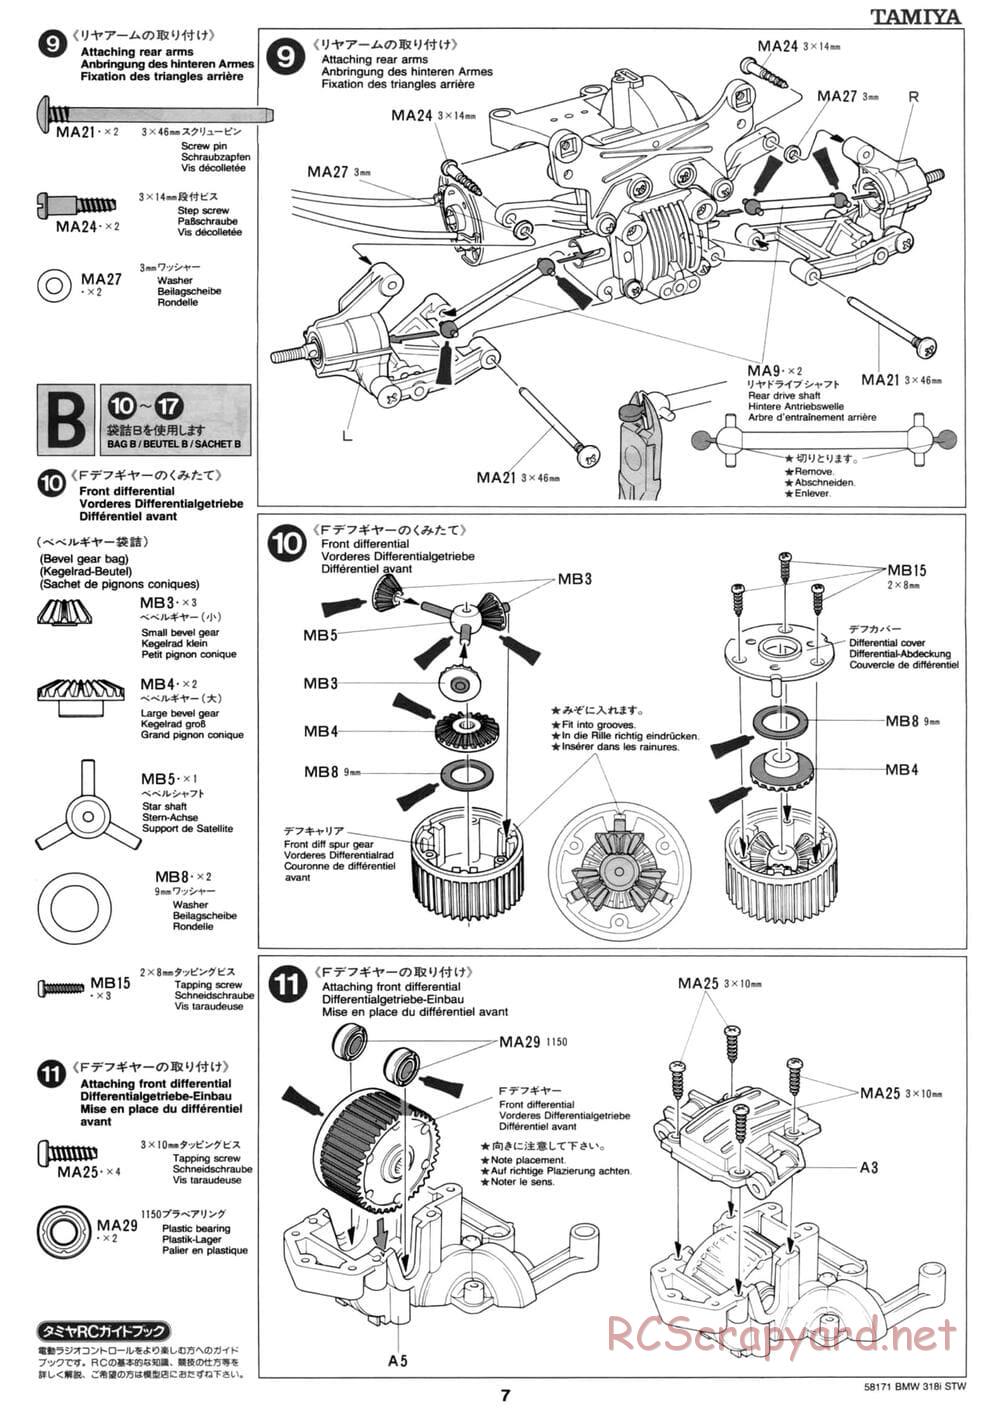 Tamiya - BMW 318i STW - TA-02 Chassis - Manual - Page 7